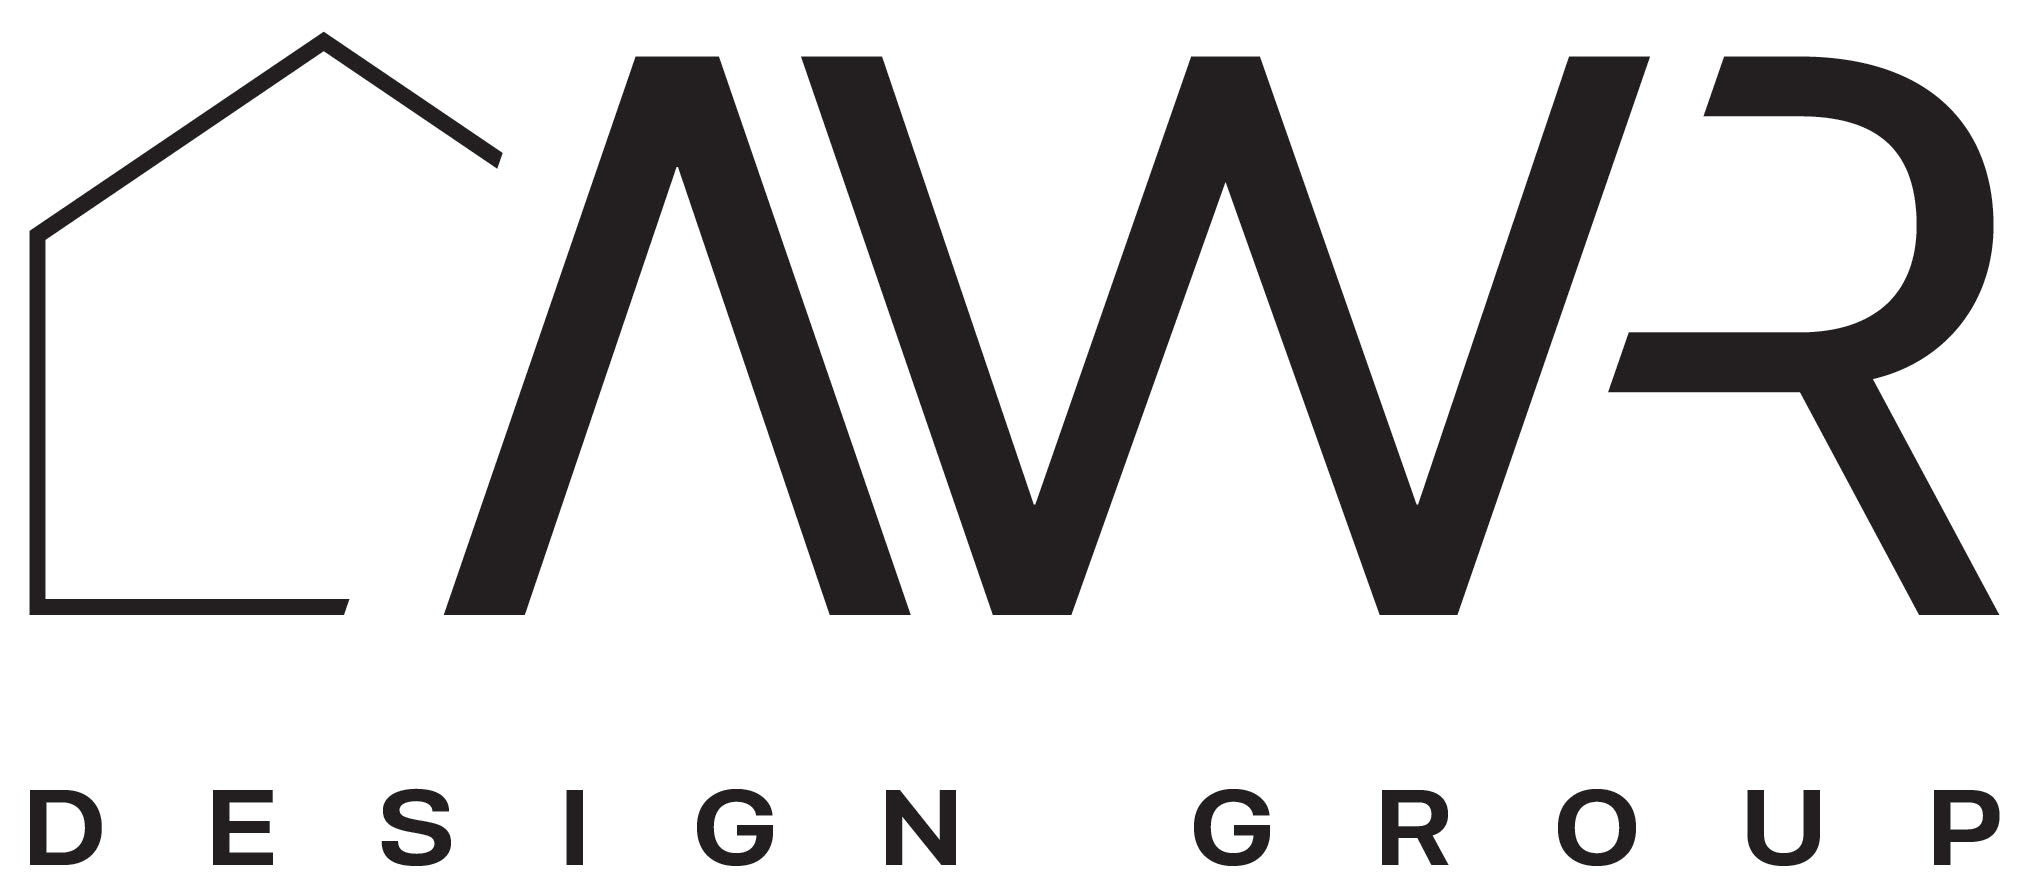 Over Coffee #4 - AWR Design Group, LLC 1